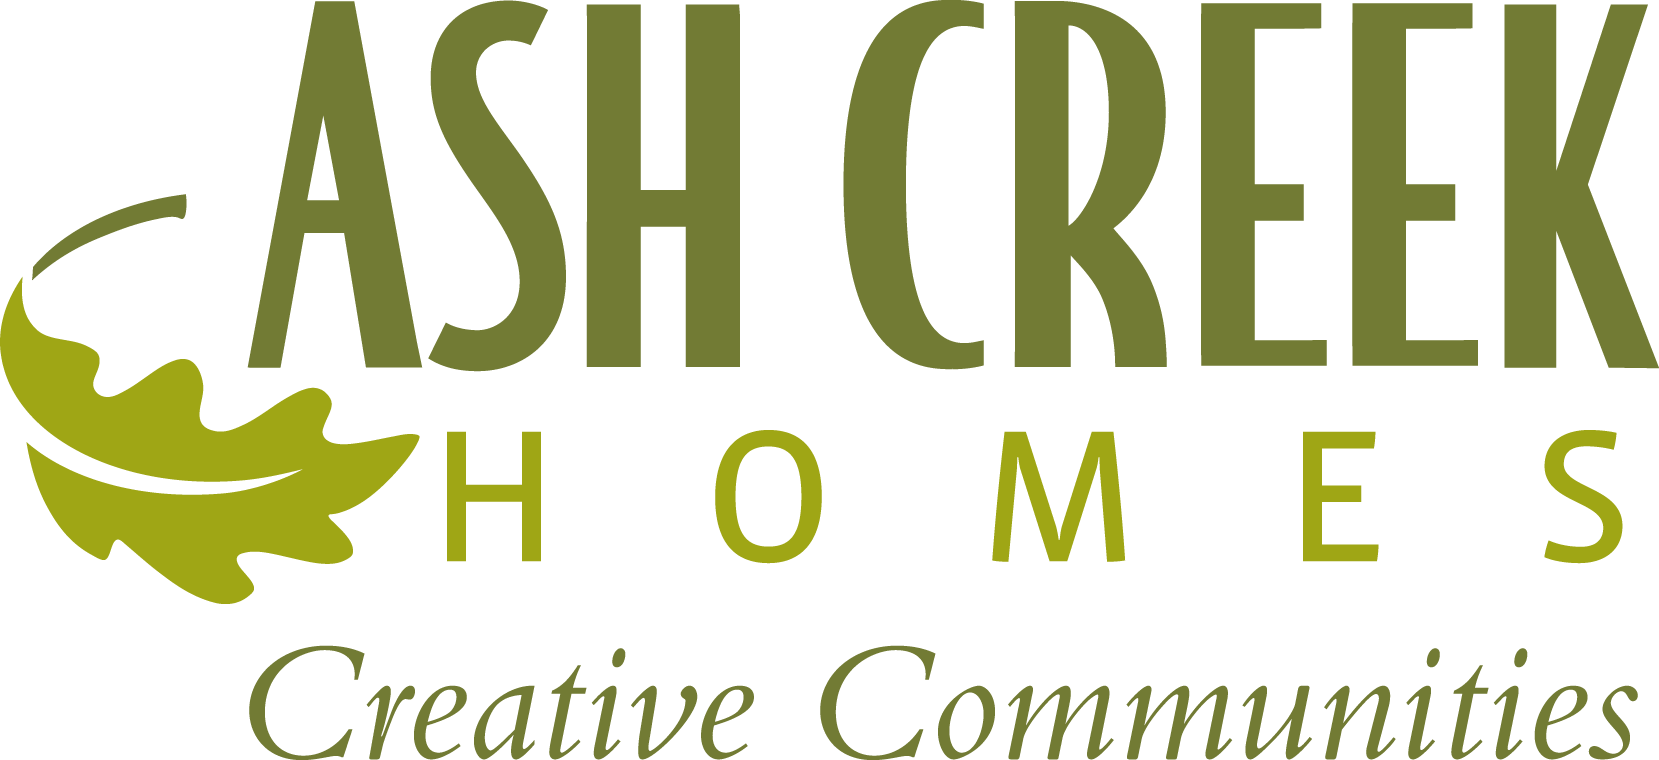 Green Builder Logo - Austin's Green Builder I Ash Creek Homes